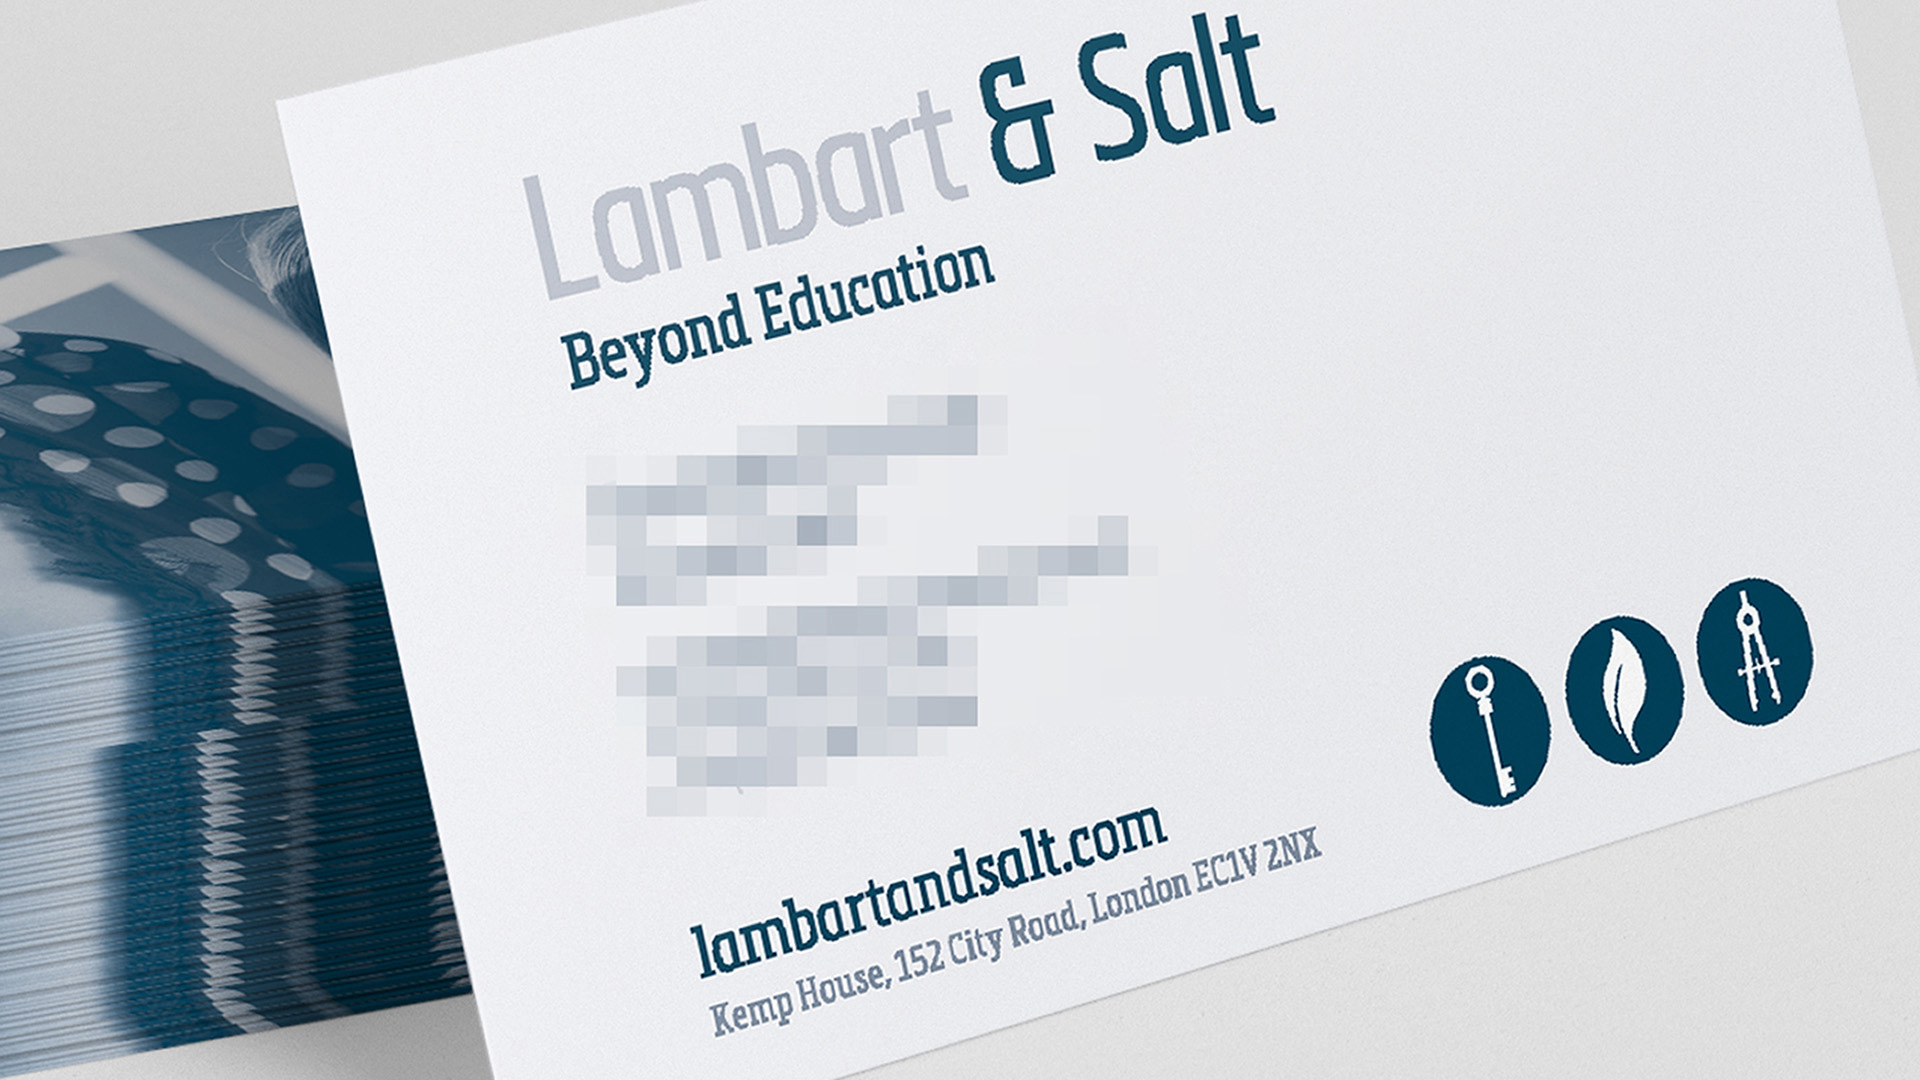 Lambart and Salt Beyond Education business cards